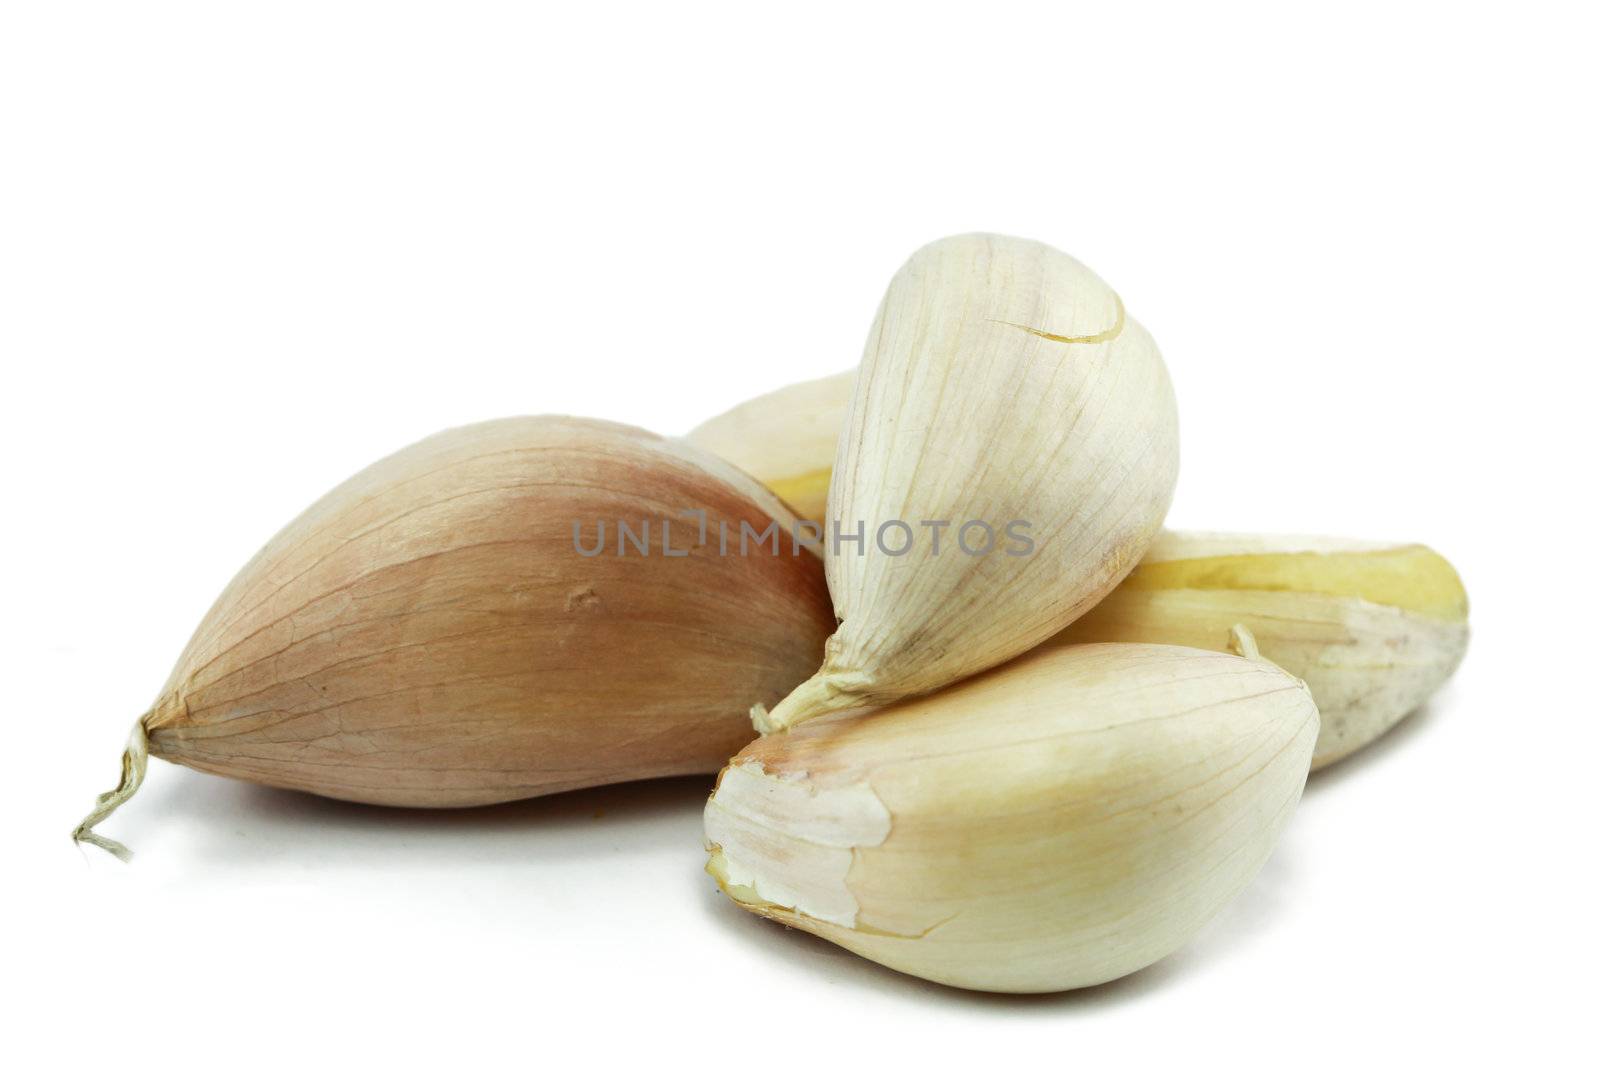 Garlic clove isolated on white background by bajita111122